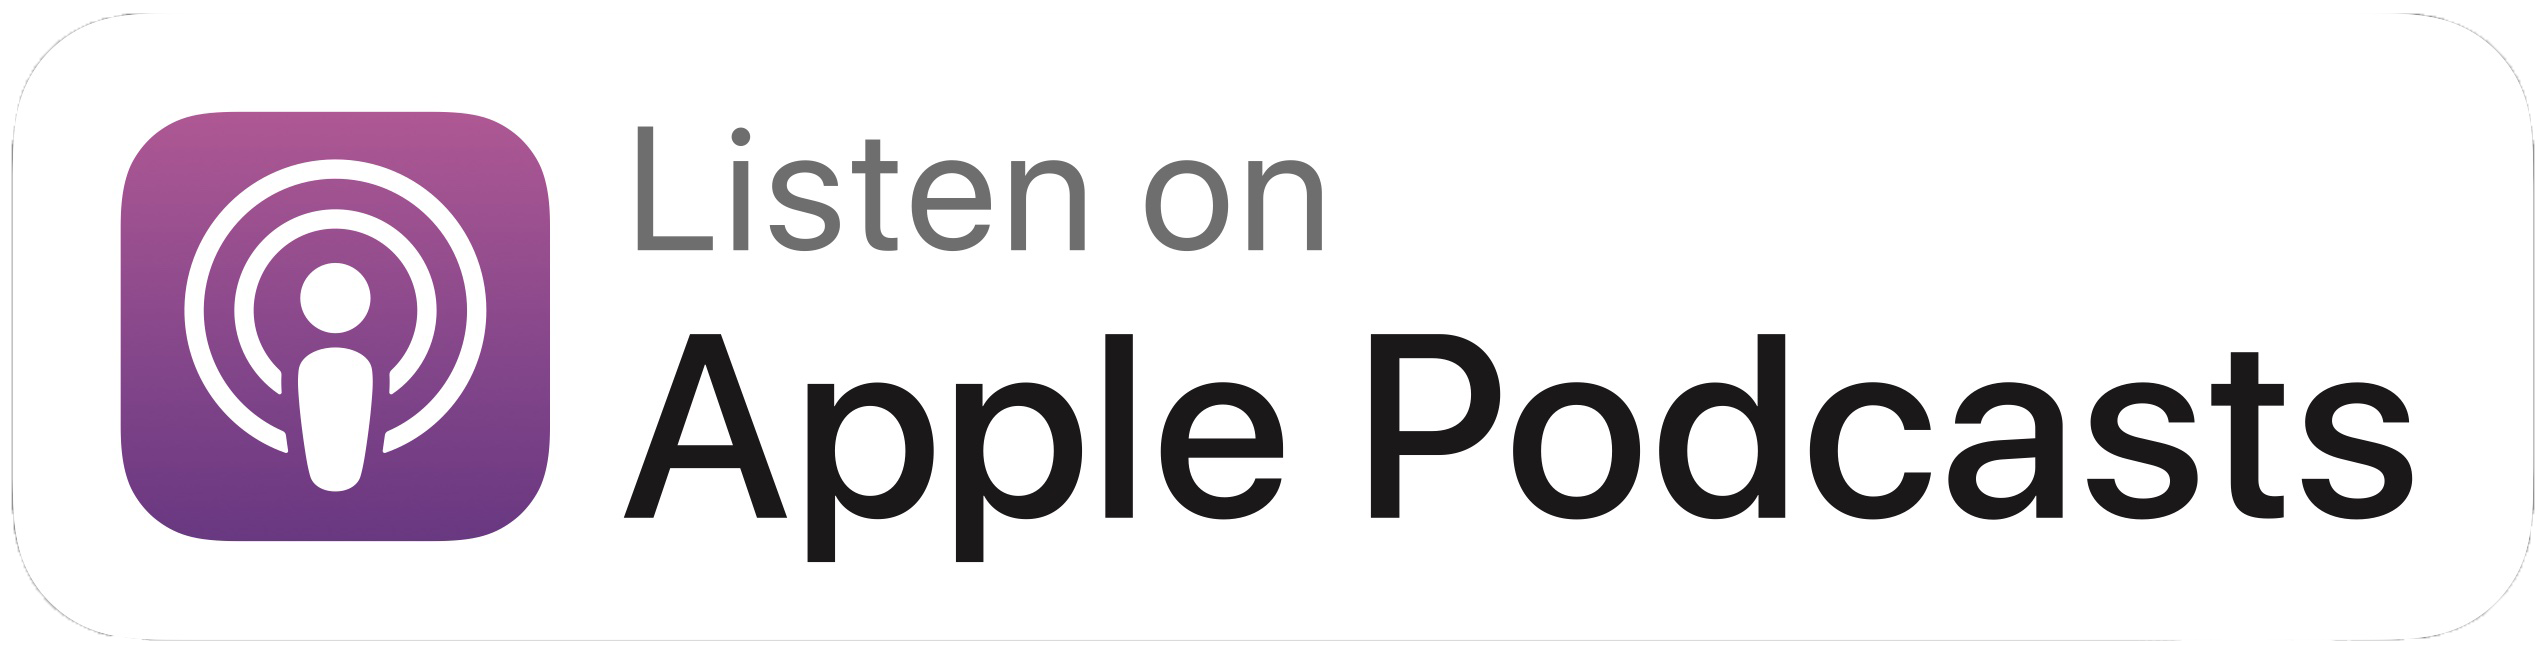 Listen-on-Apple-Podcasts-badge